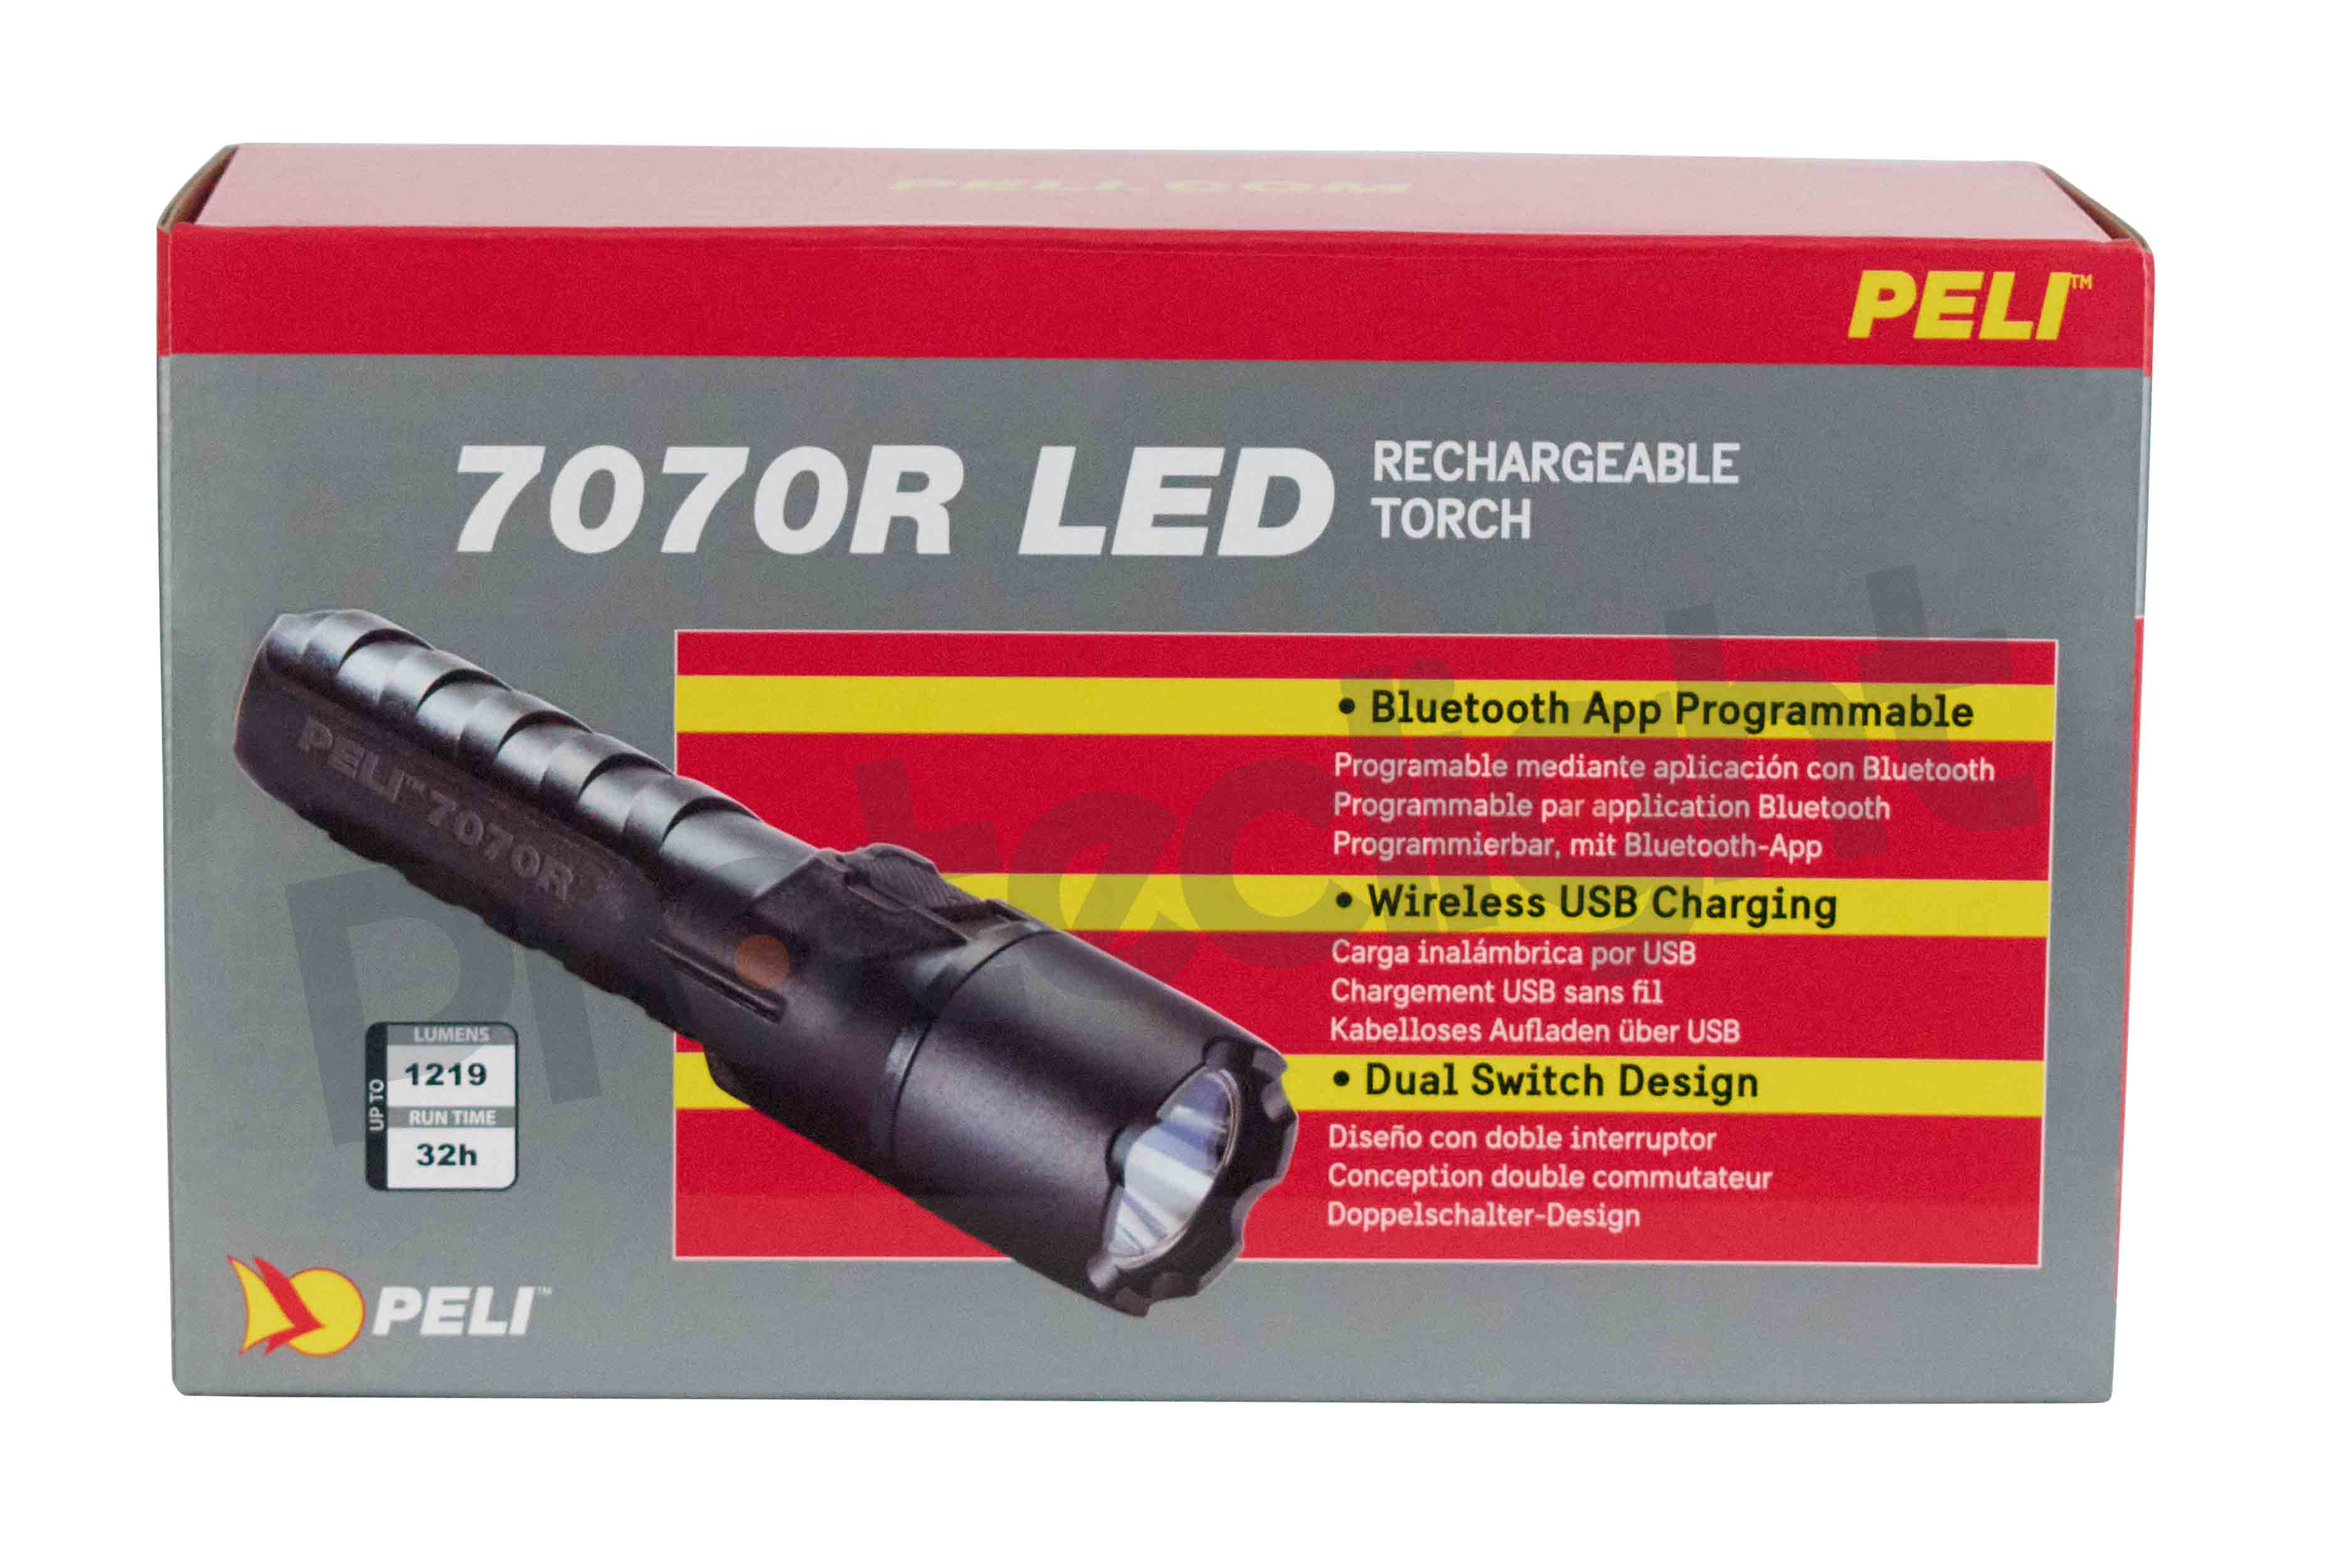 M18™ Lampe torche LED, Torche LED portative sans fil